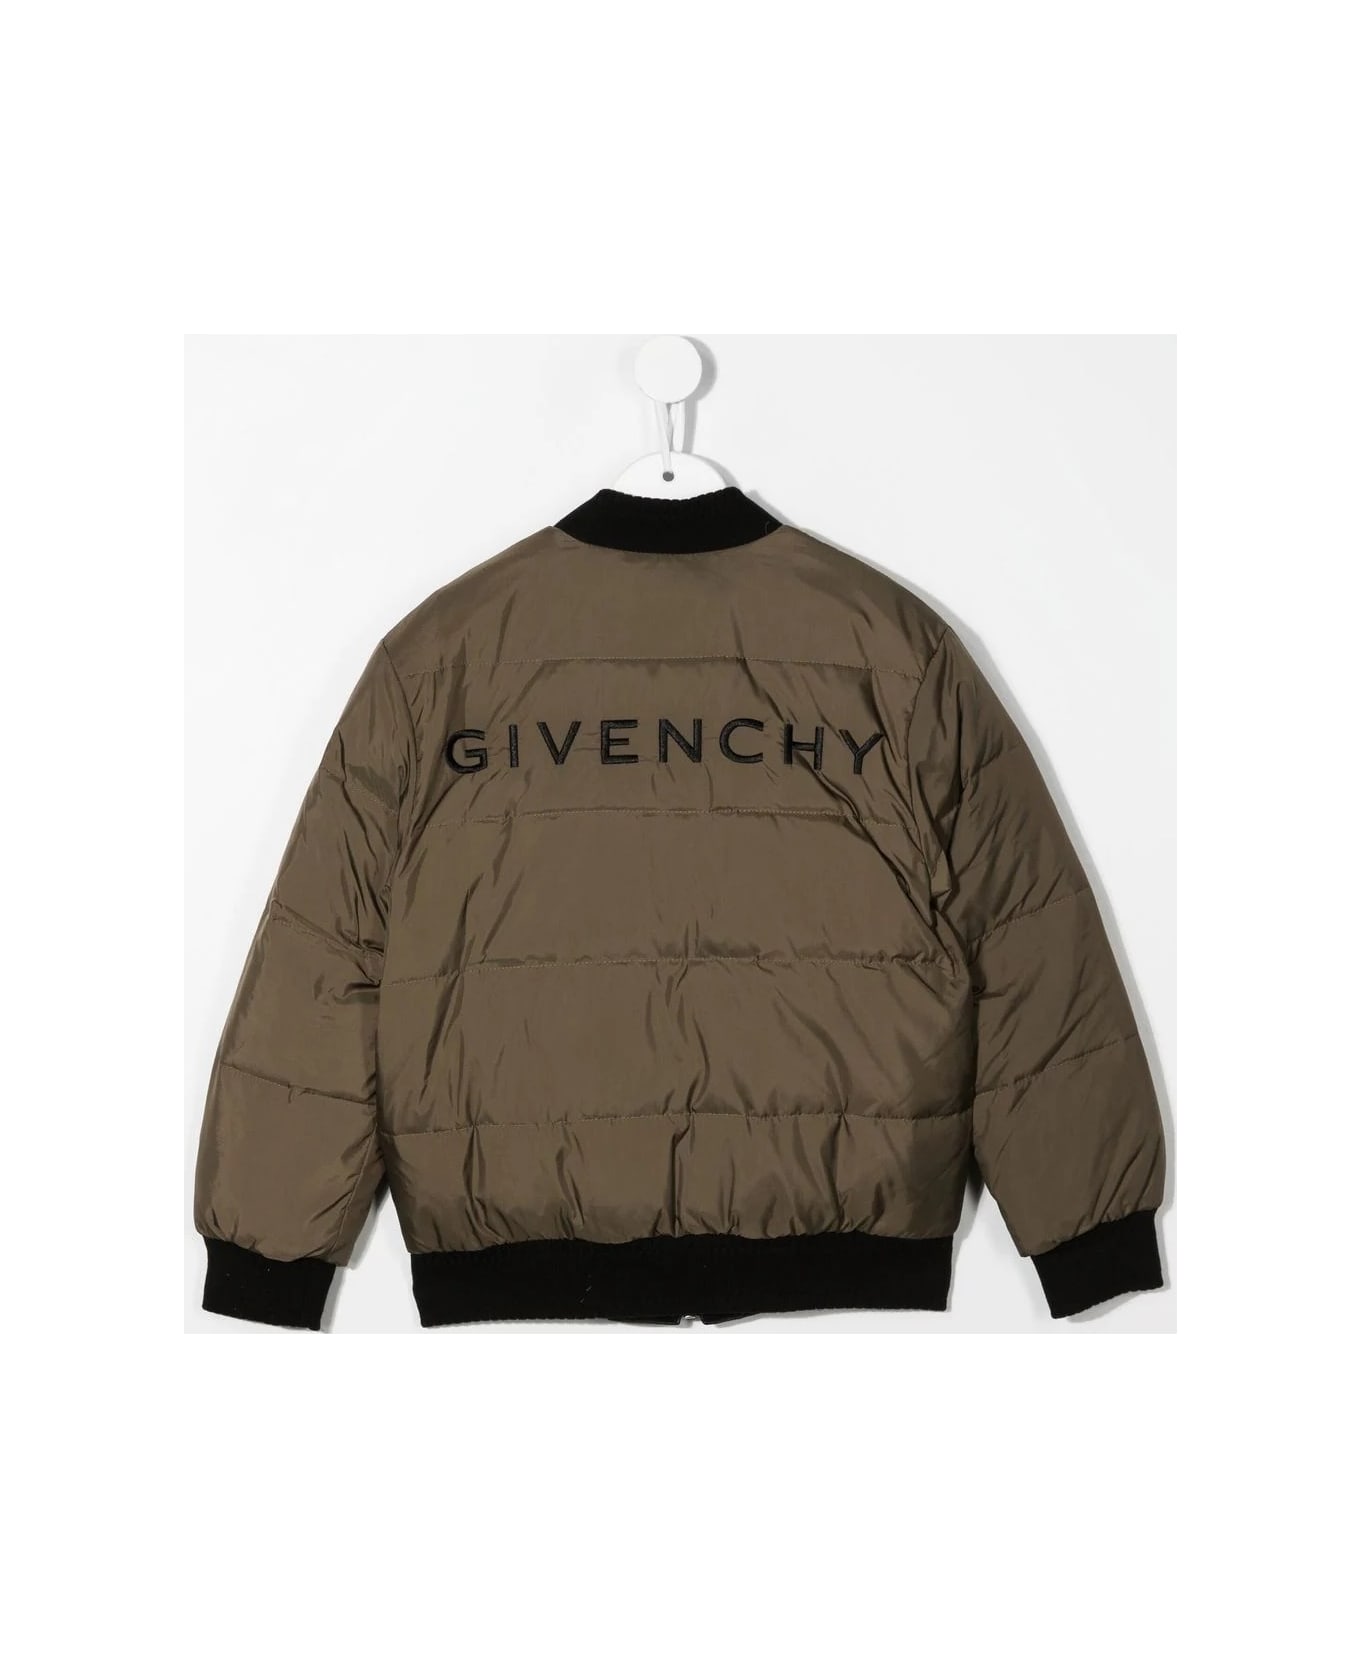 Givenchy Black And Khaki Reversible Down Jacket With Logo - Nero/kaki